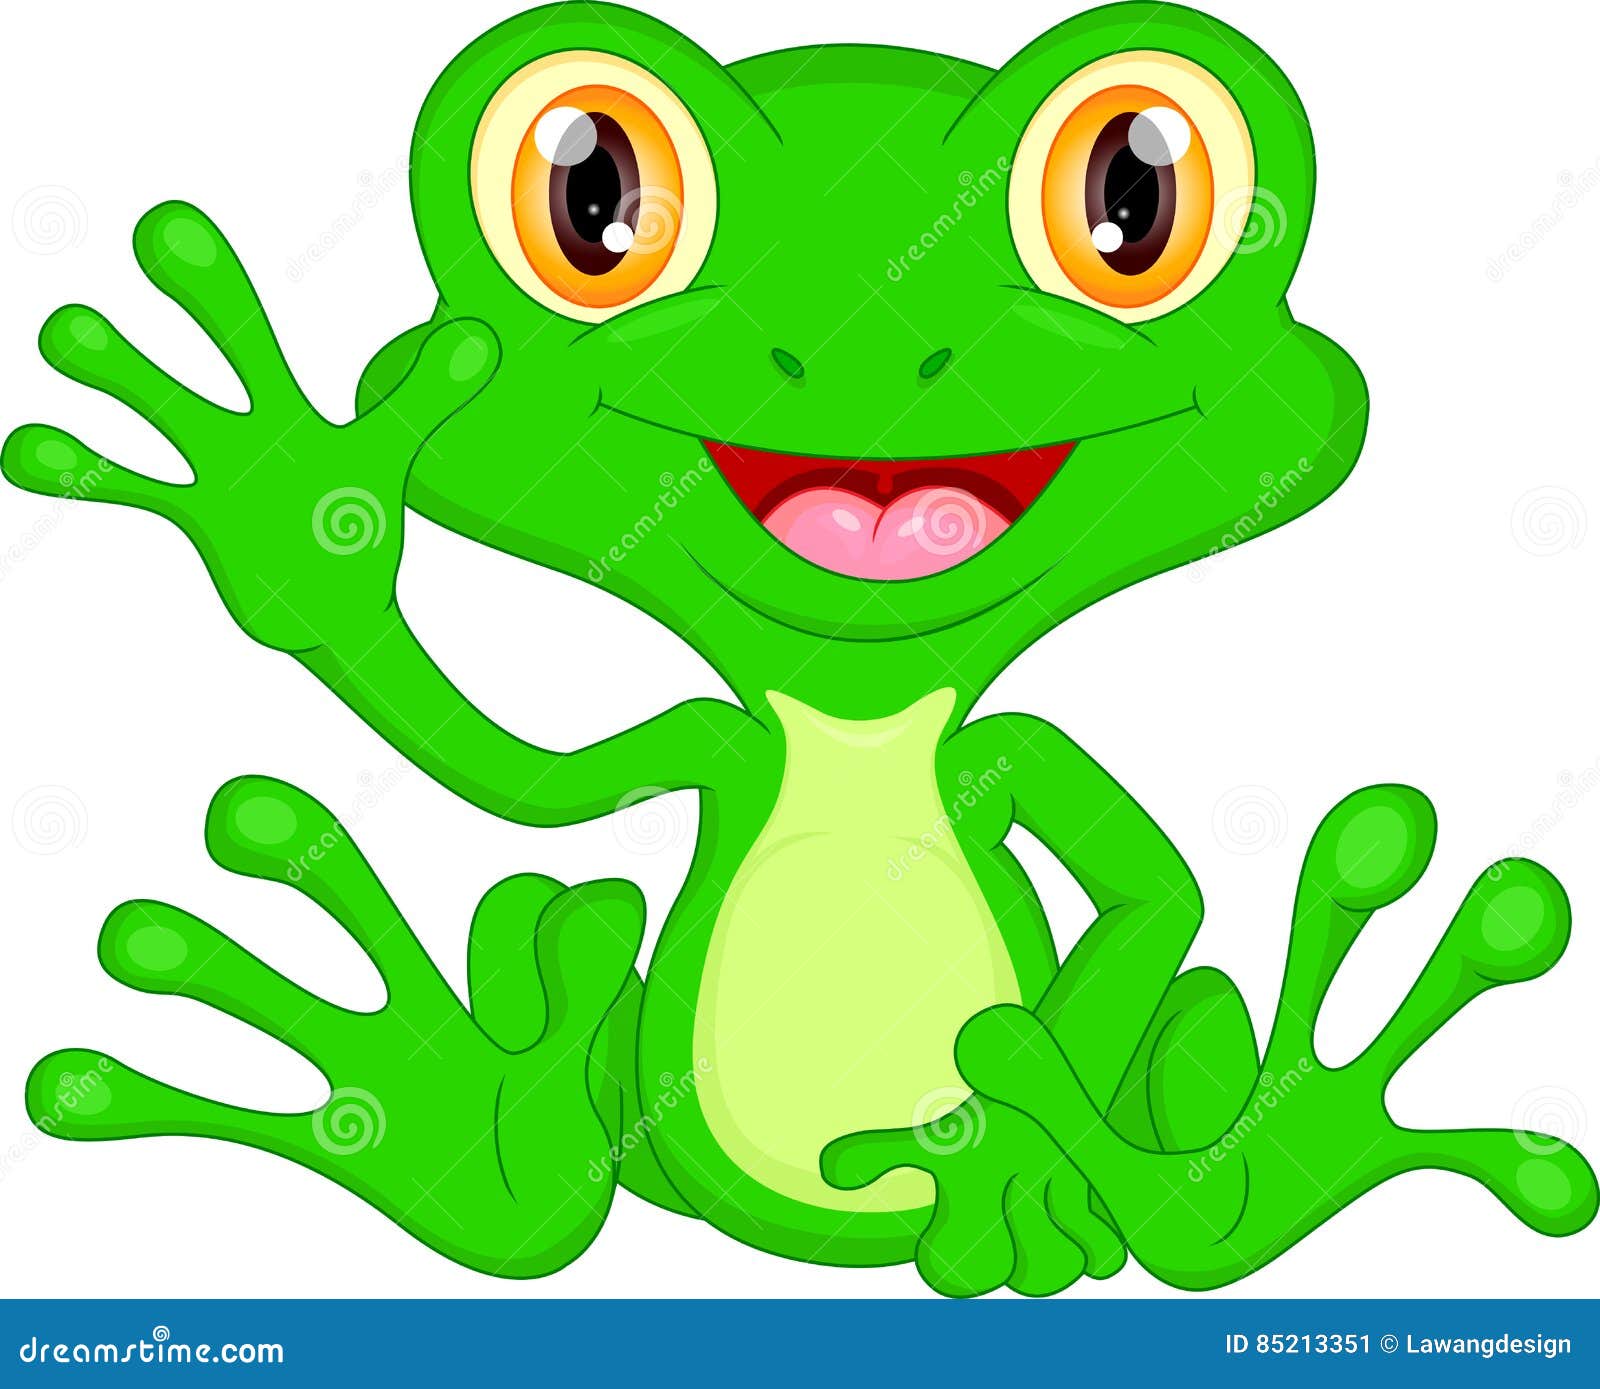 Green frog cartoon waving stock vector. Illustration of creature - 85213351